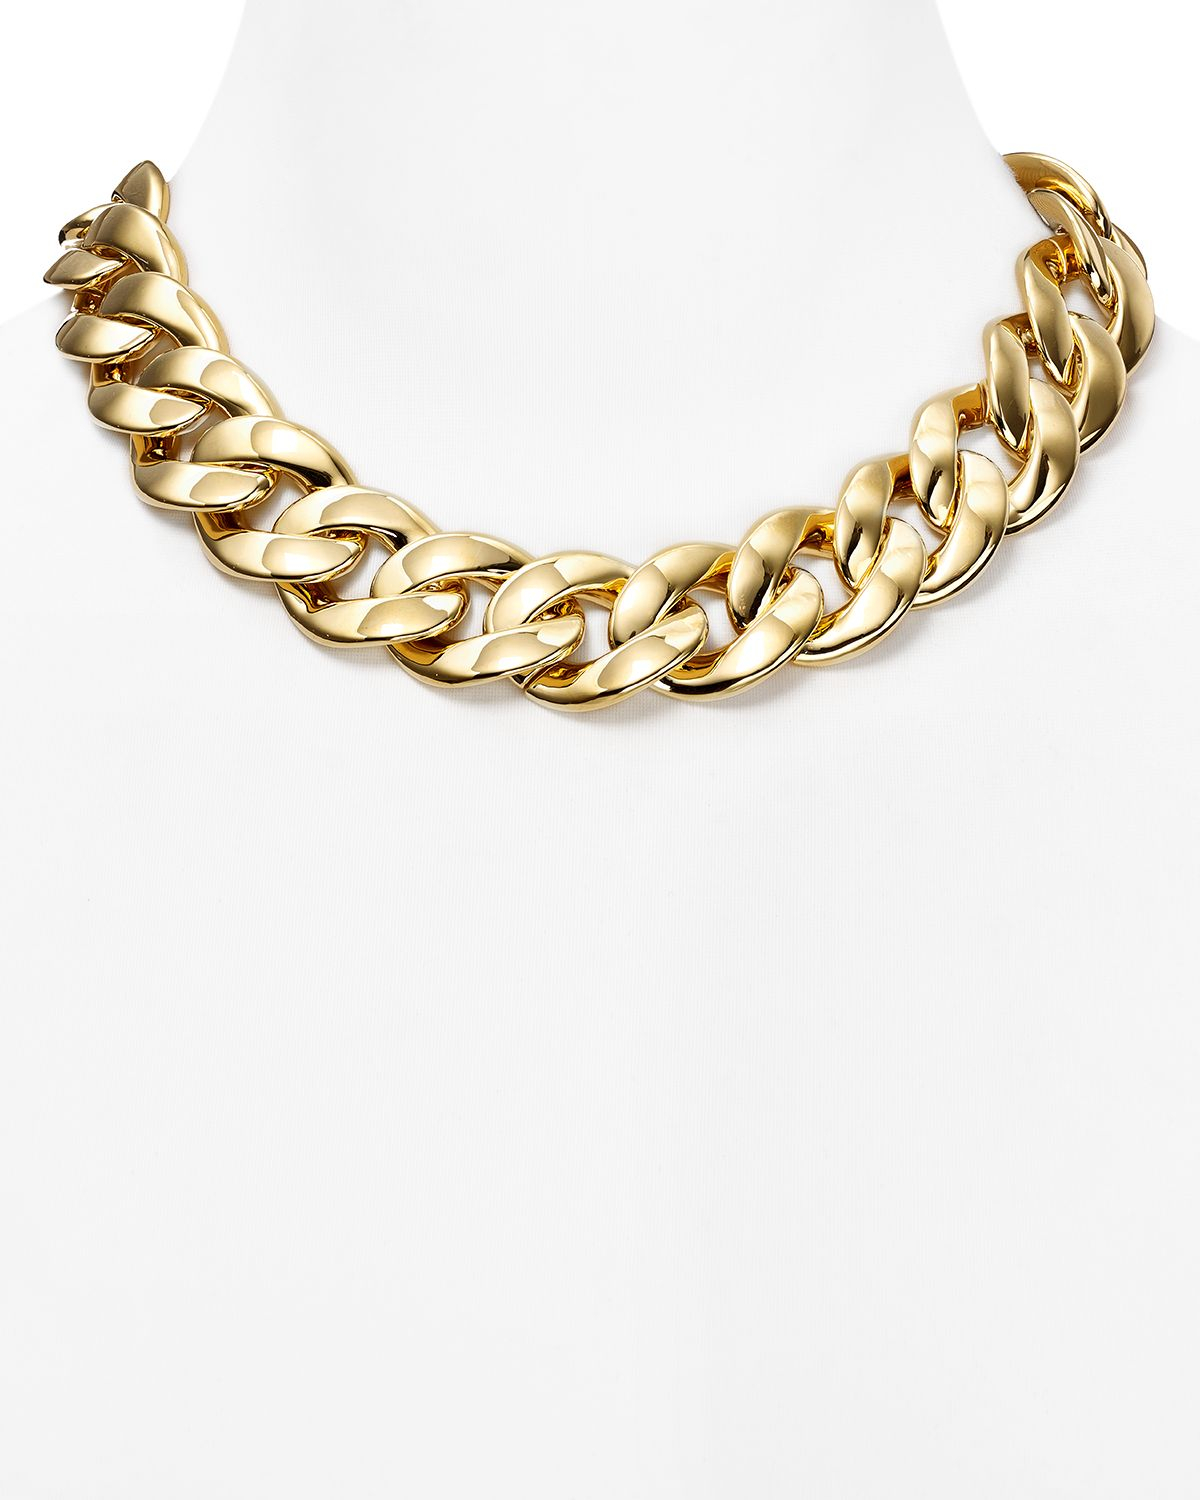 michael kors chain link necklace